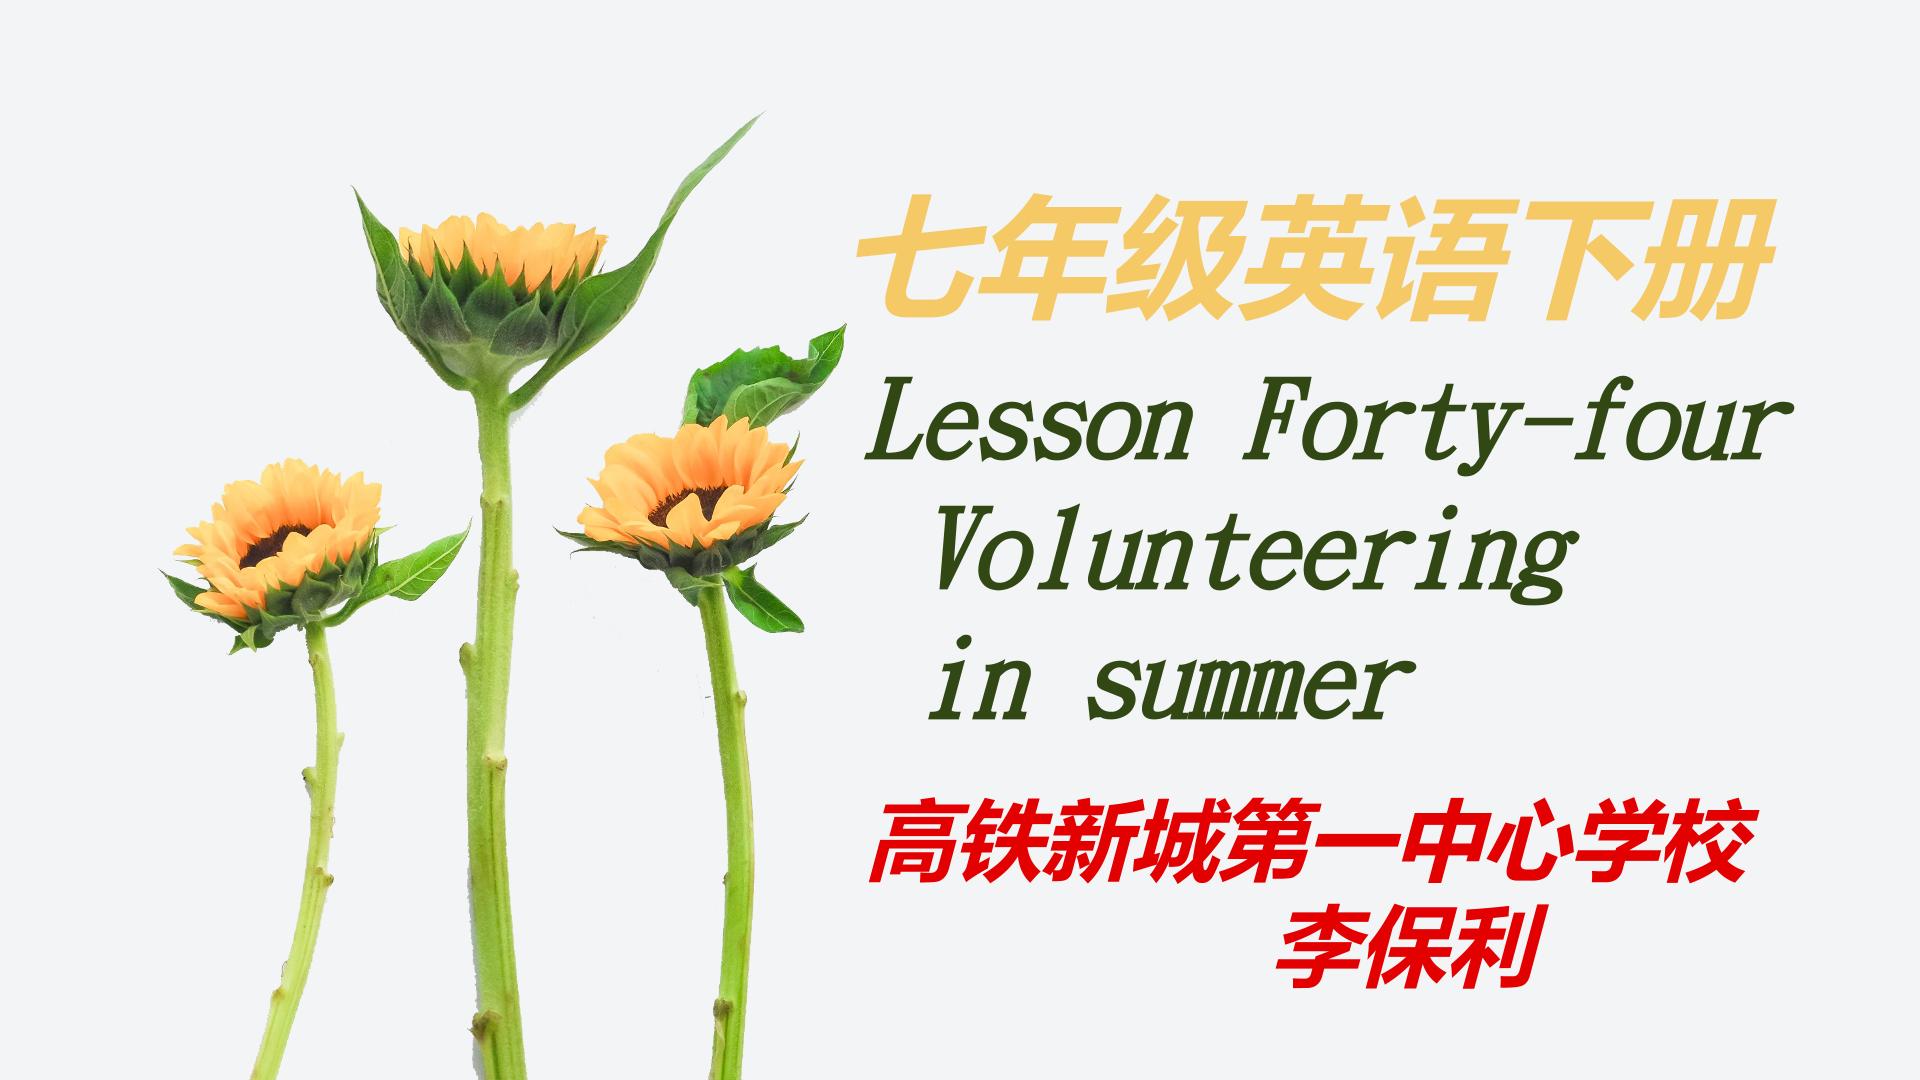 Volunteering in Summer